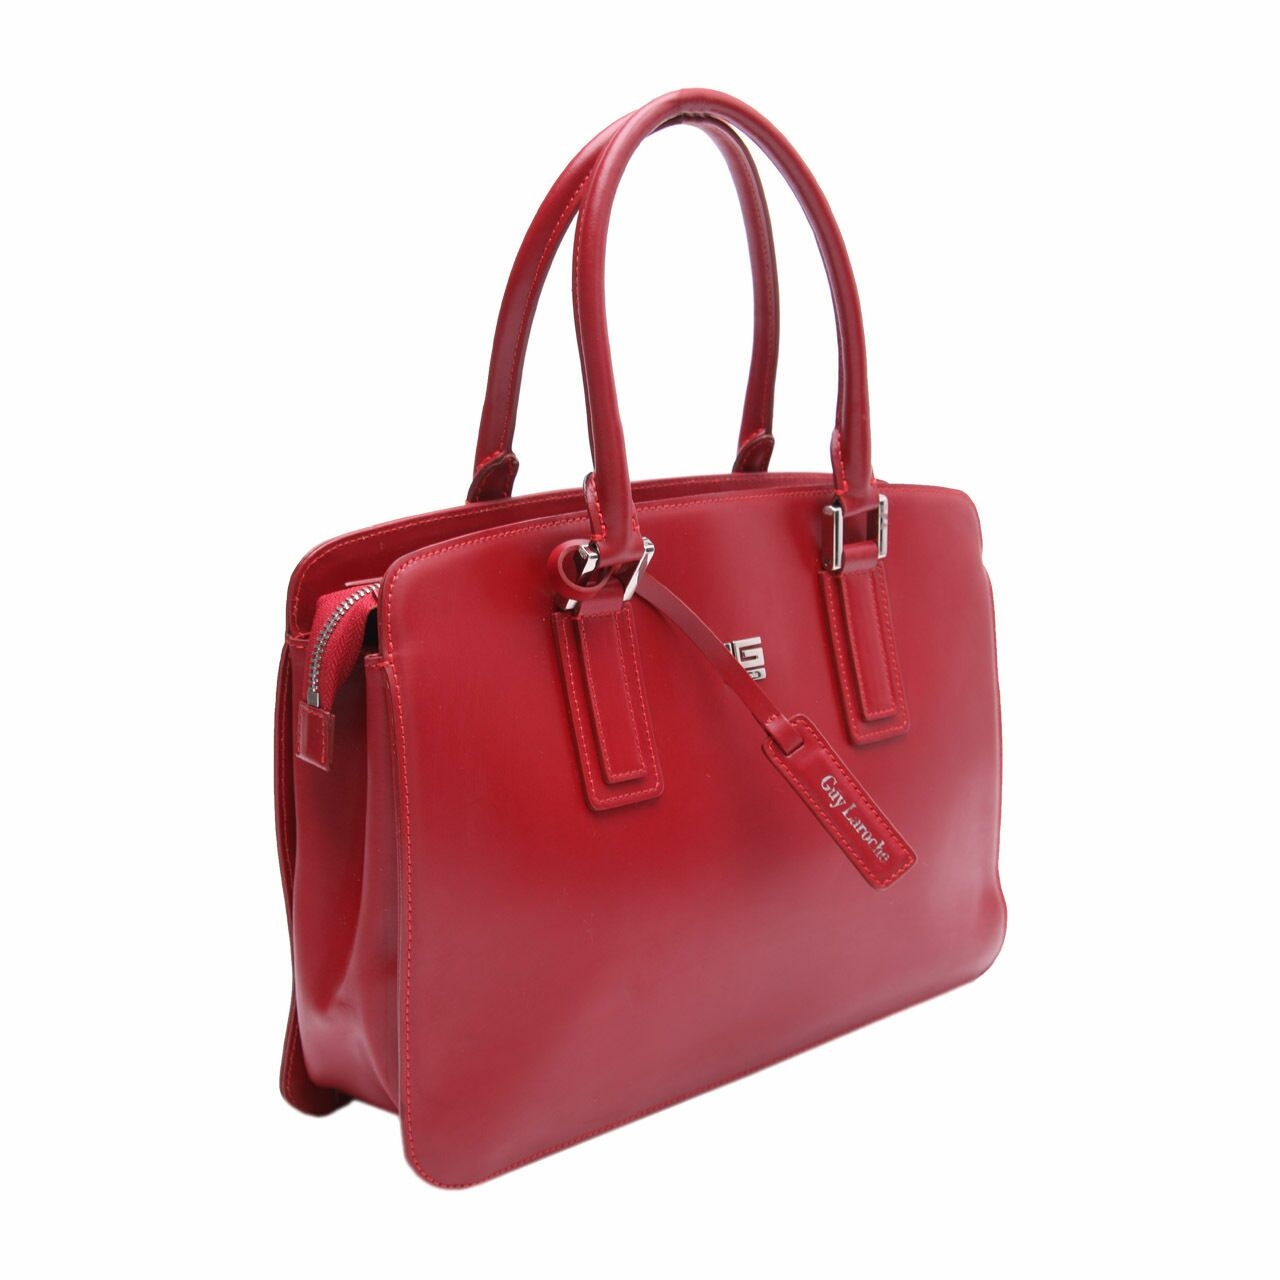 Guy Laroche Red Handbag